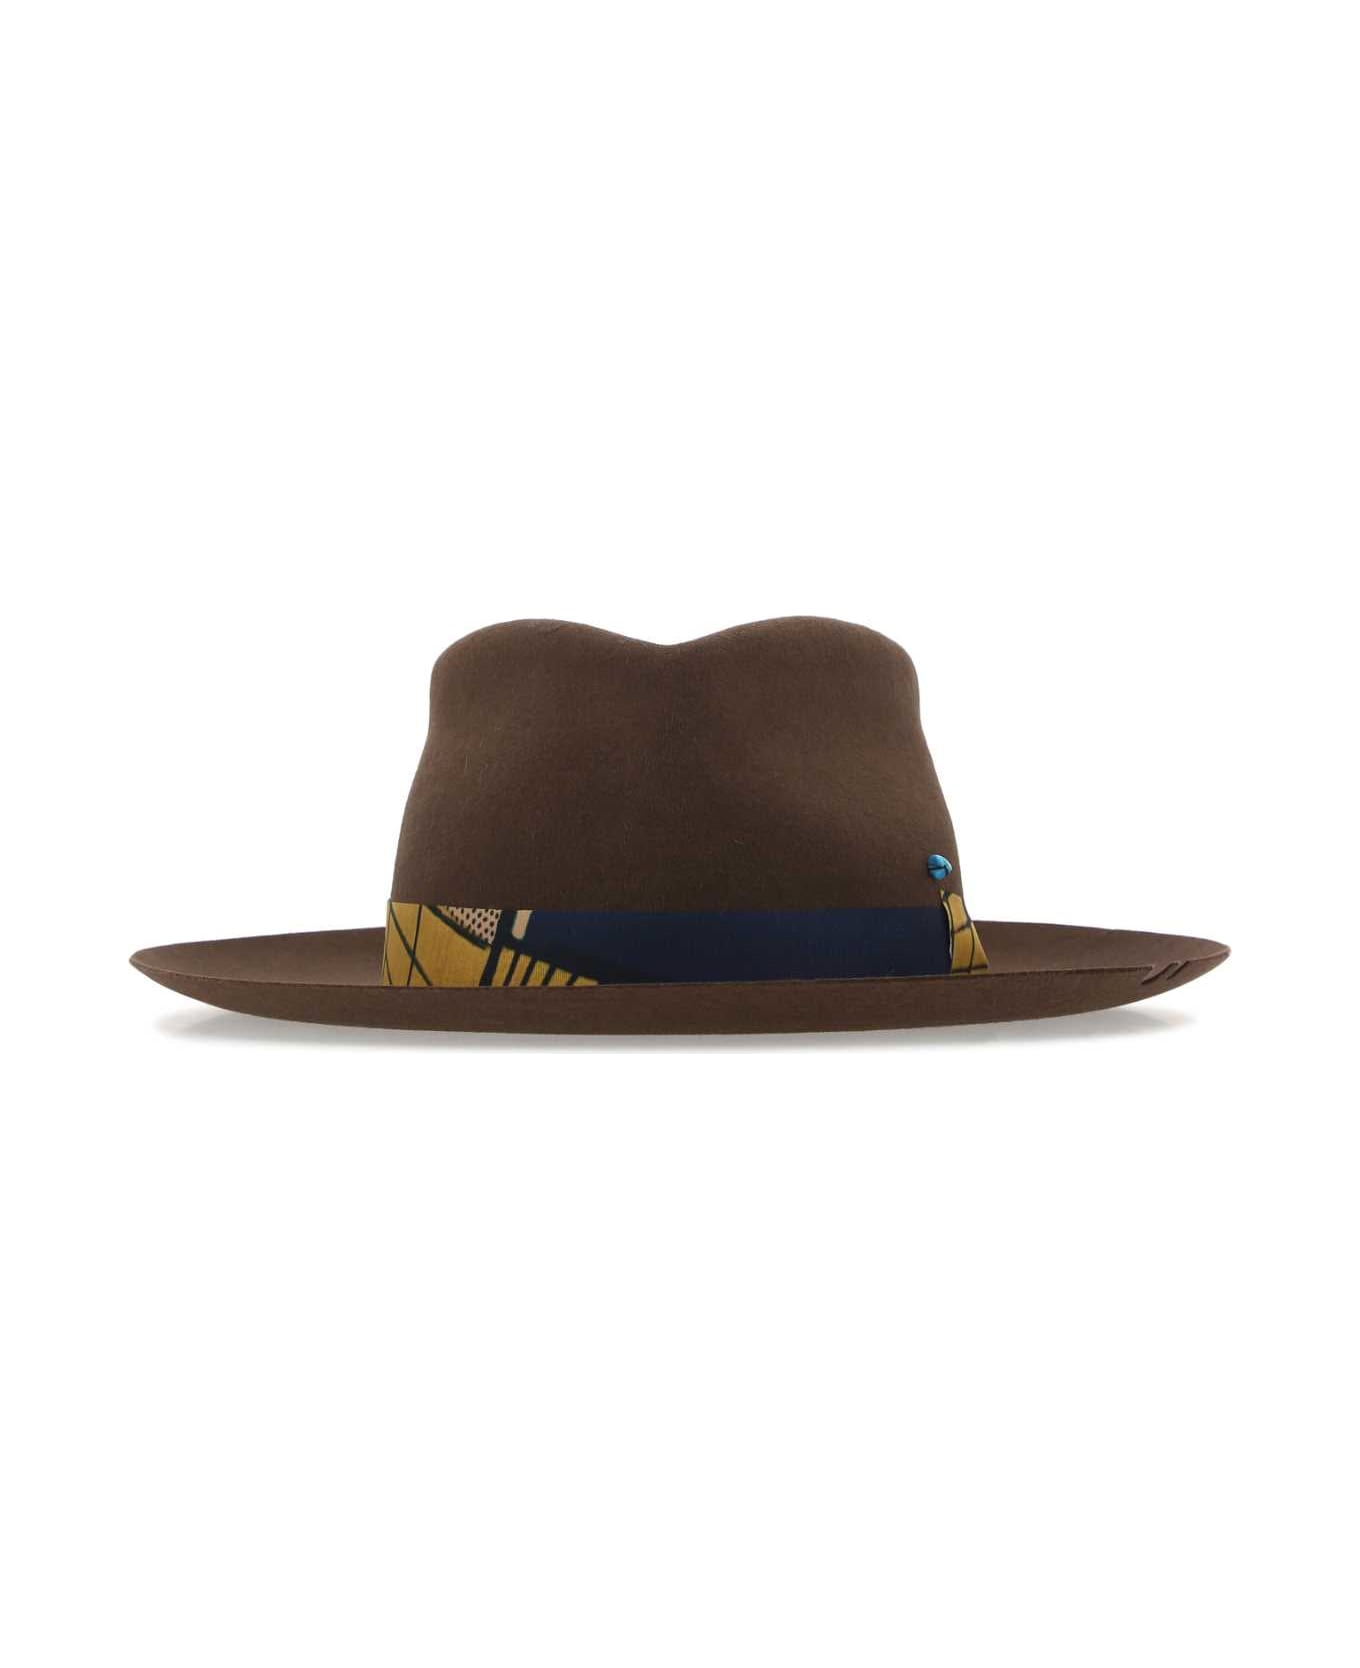 Super Duper Hats Brown Felt Bouganville Hat - TERRA